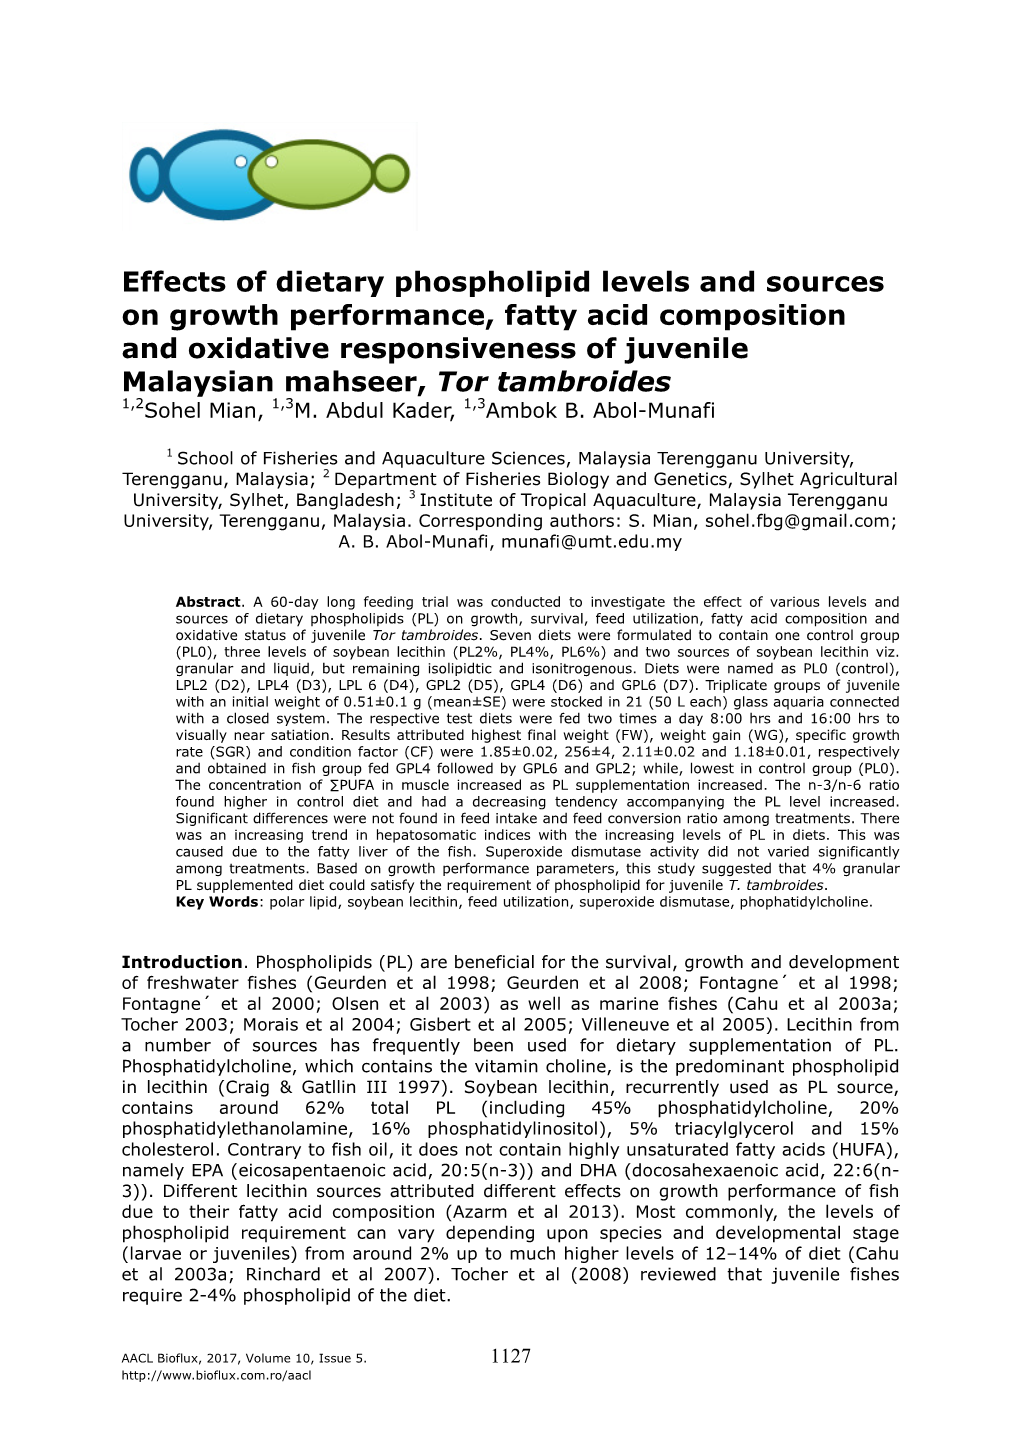 Mian S., Kader M. A., Abol-Munafi A. B., 2017 Effects of Dietary